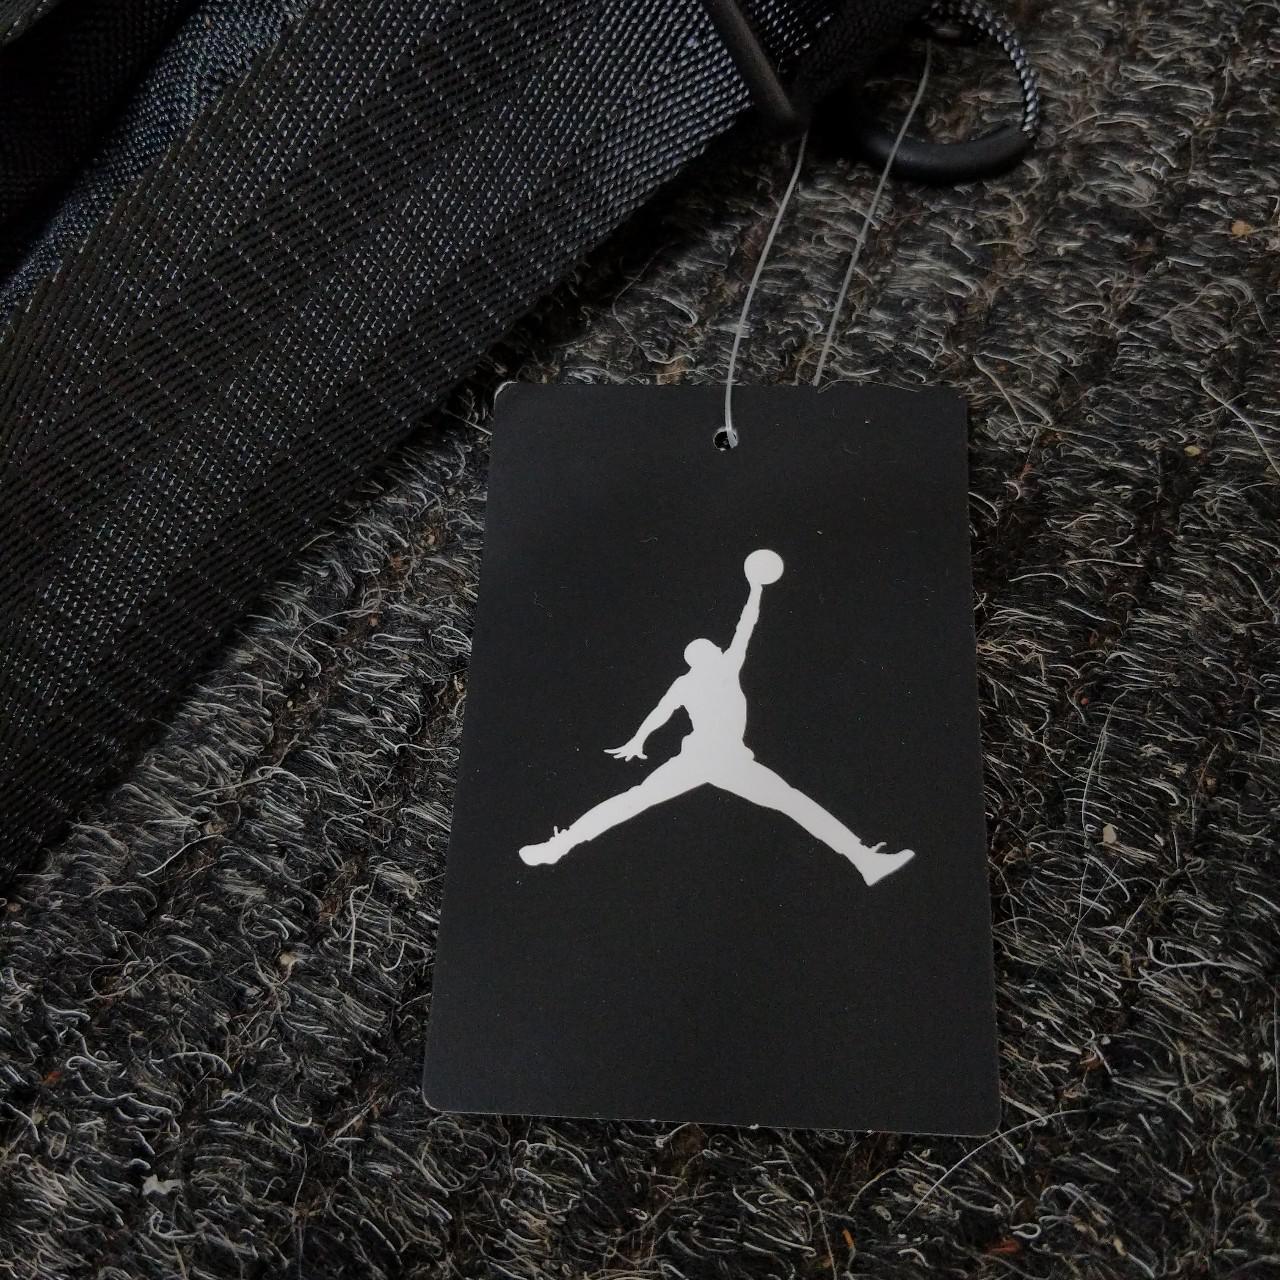 Product Image 4 - Nike Jordan Side Bag

Brand new